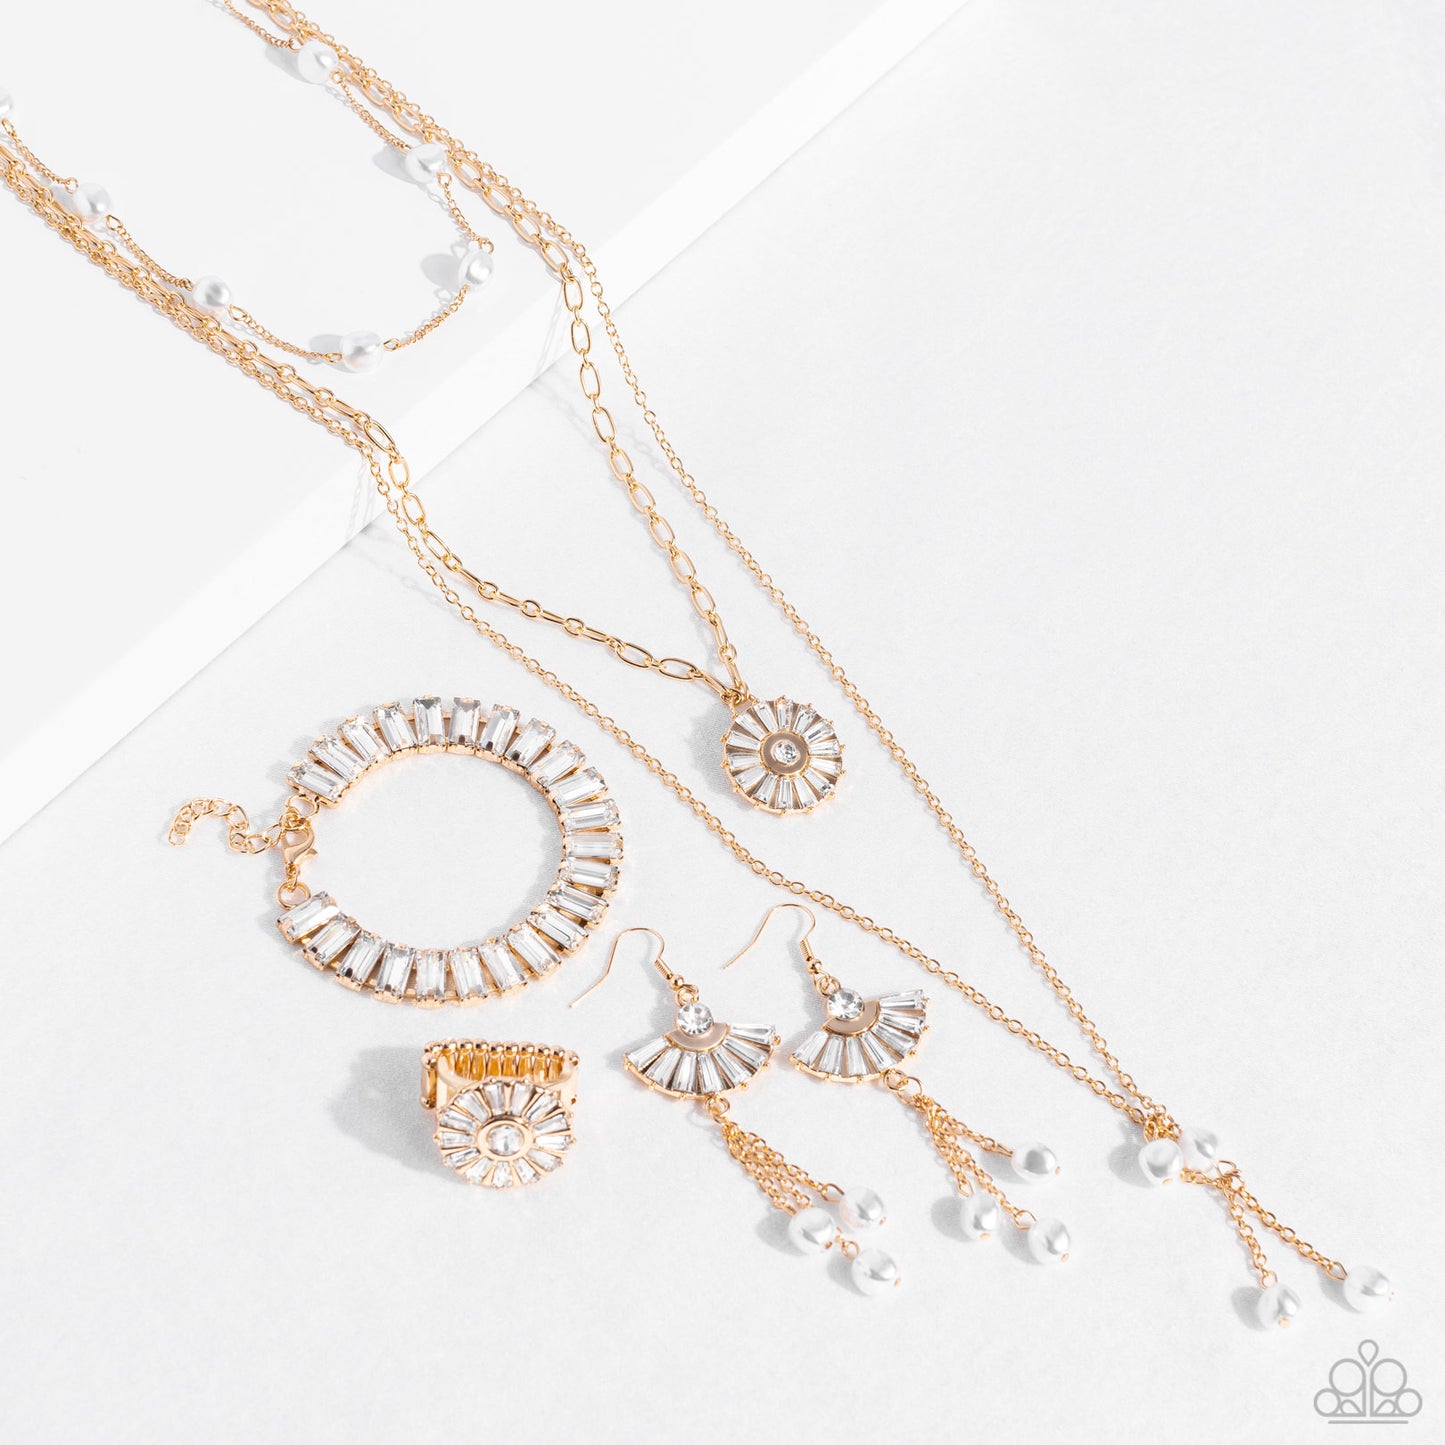 Necklace: "Audaciously Austen - Gold